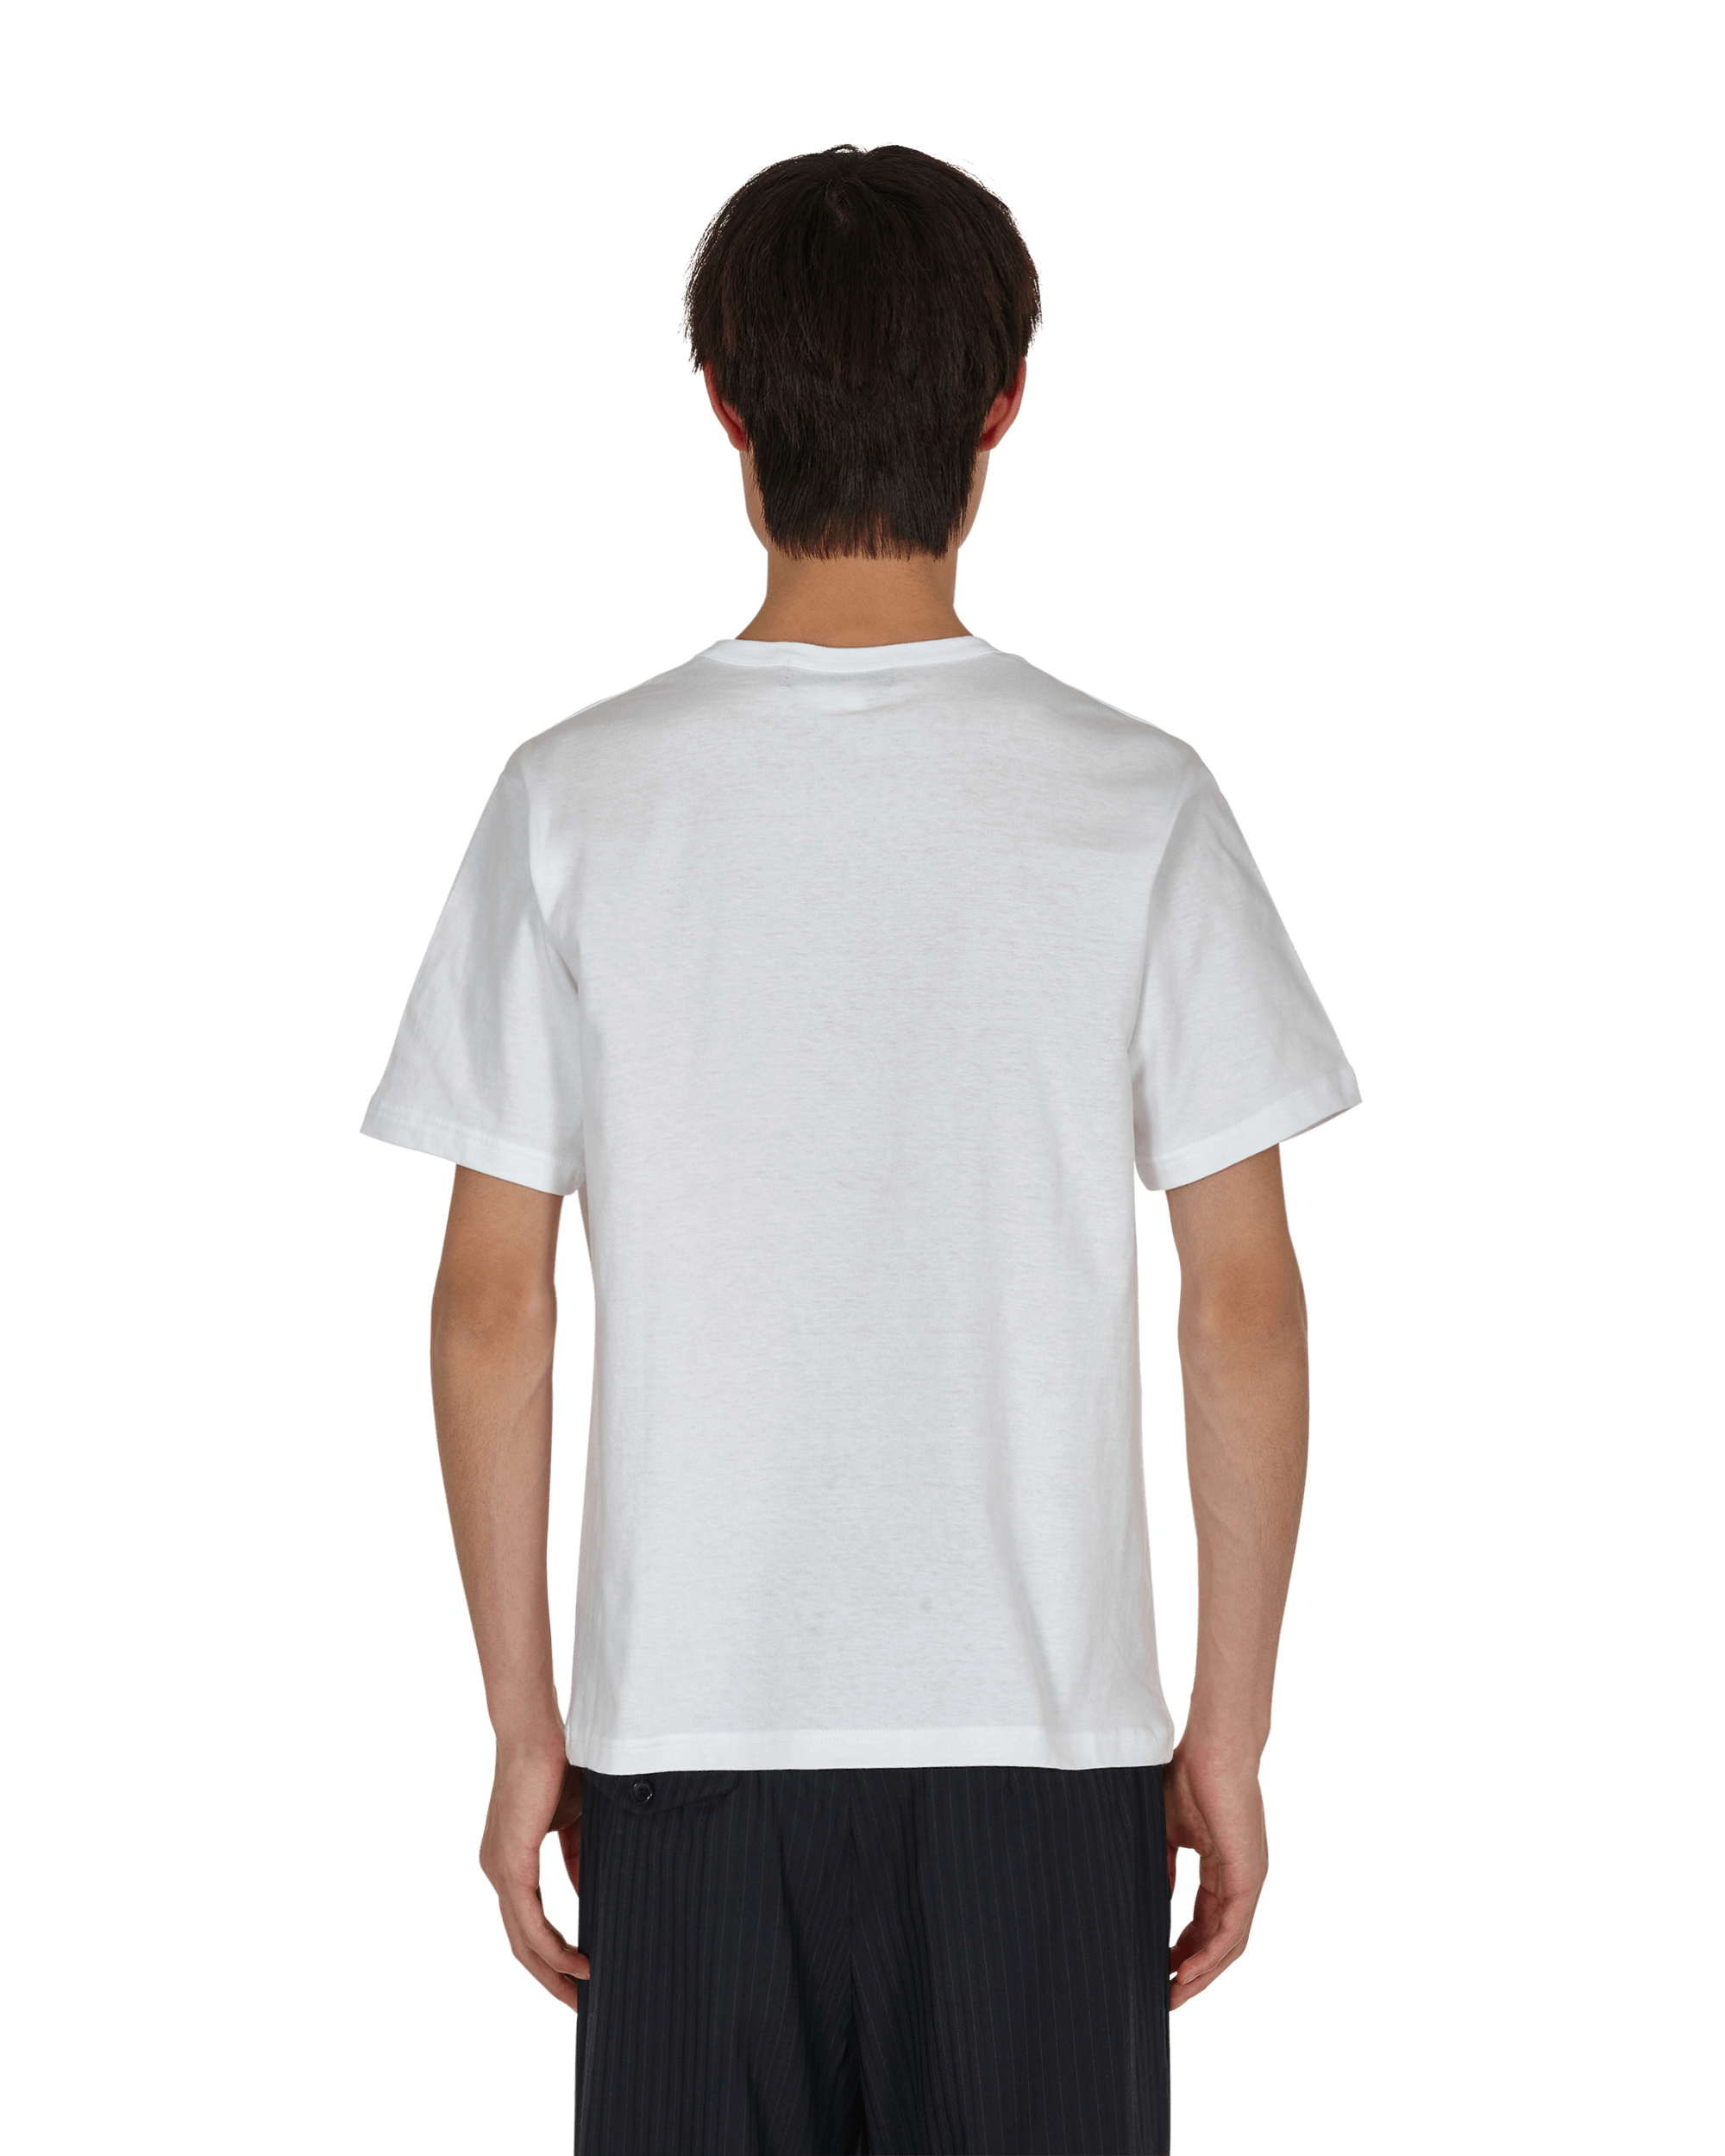 Comme Des Garcons Black T-Shirt White T-Shirts Shortsleeve 1H-T103-W21 1